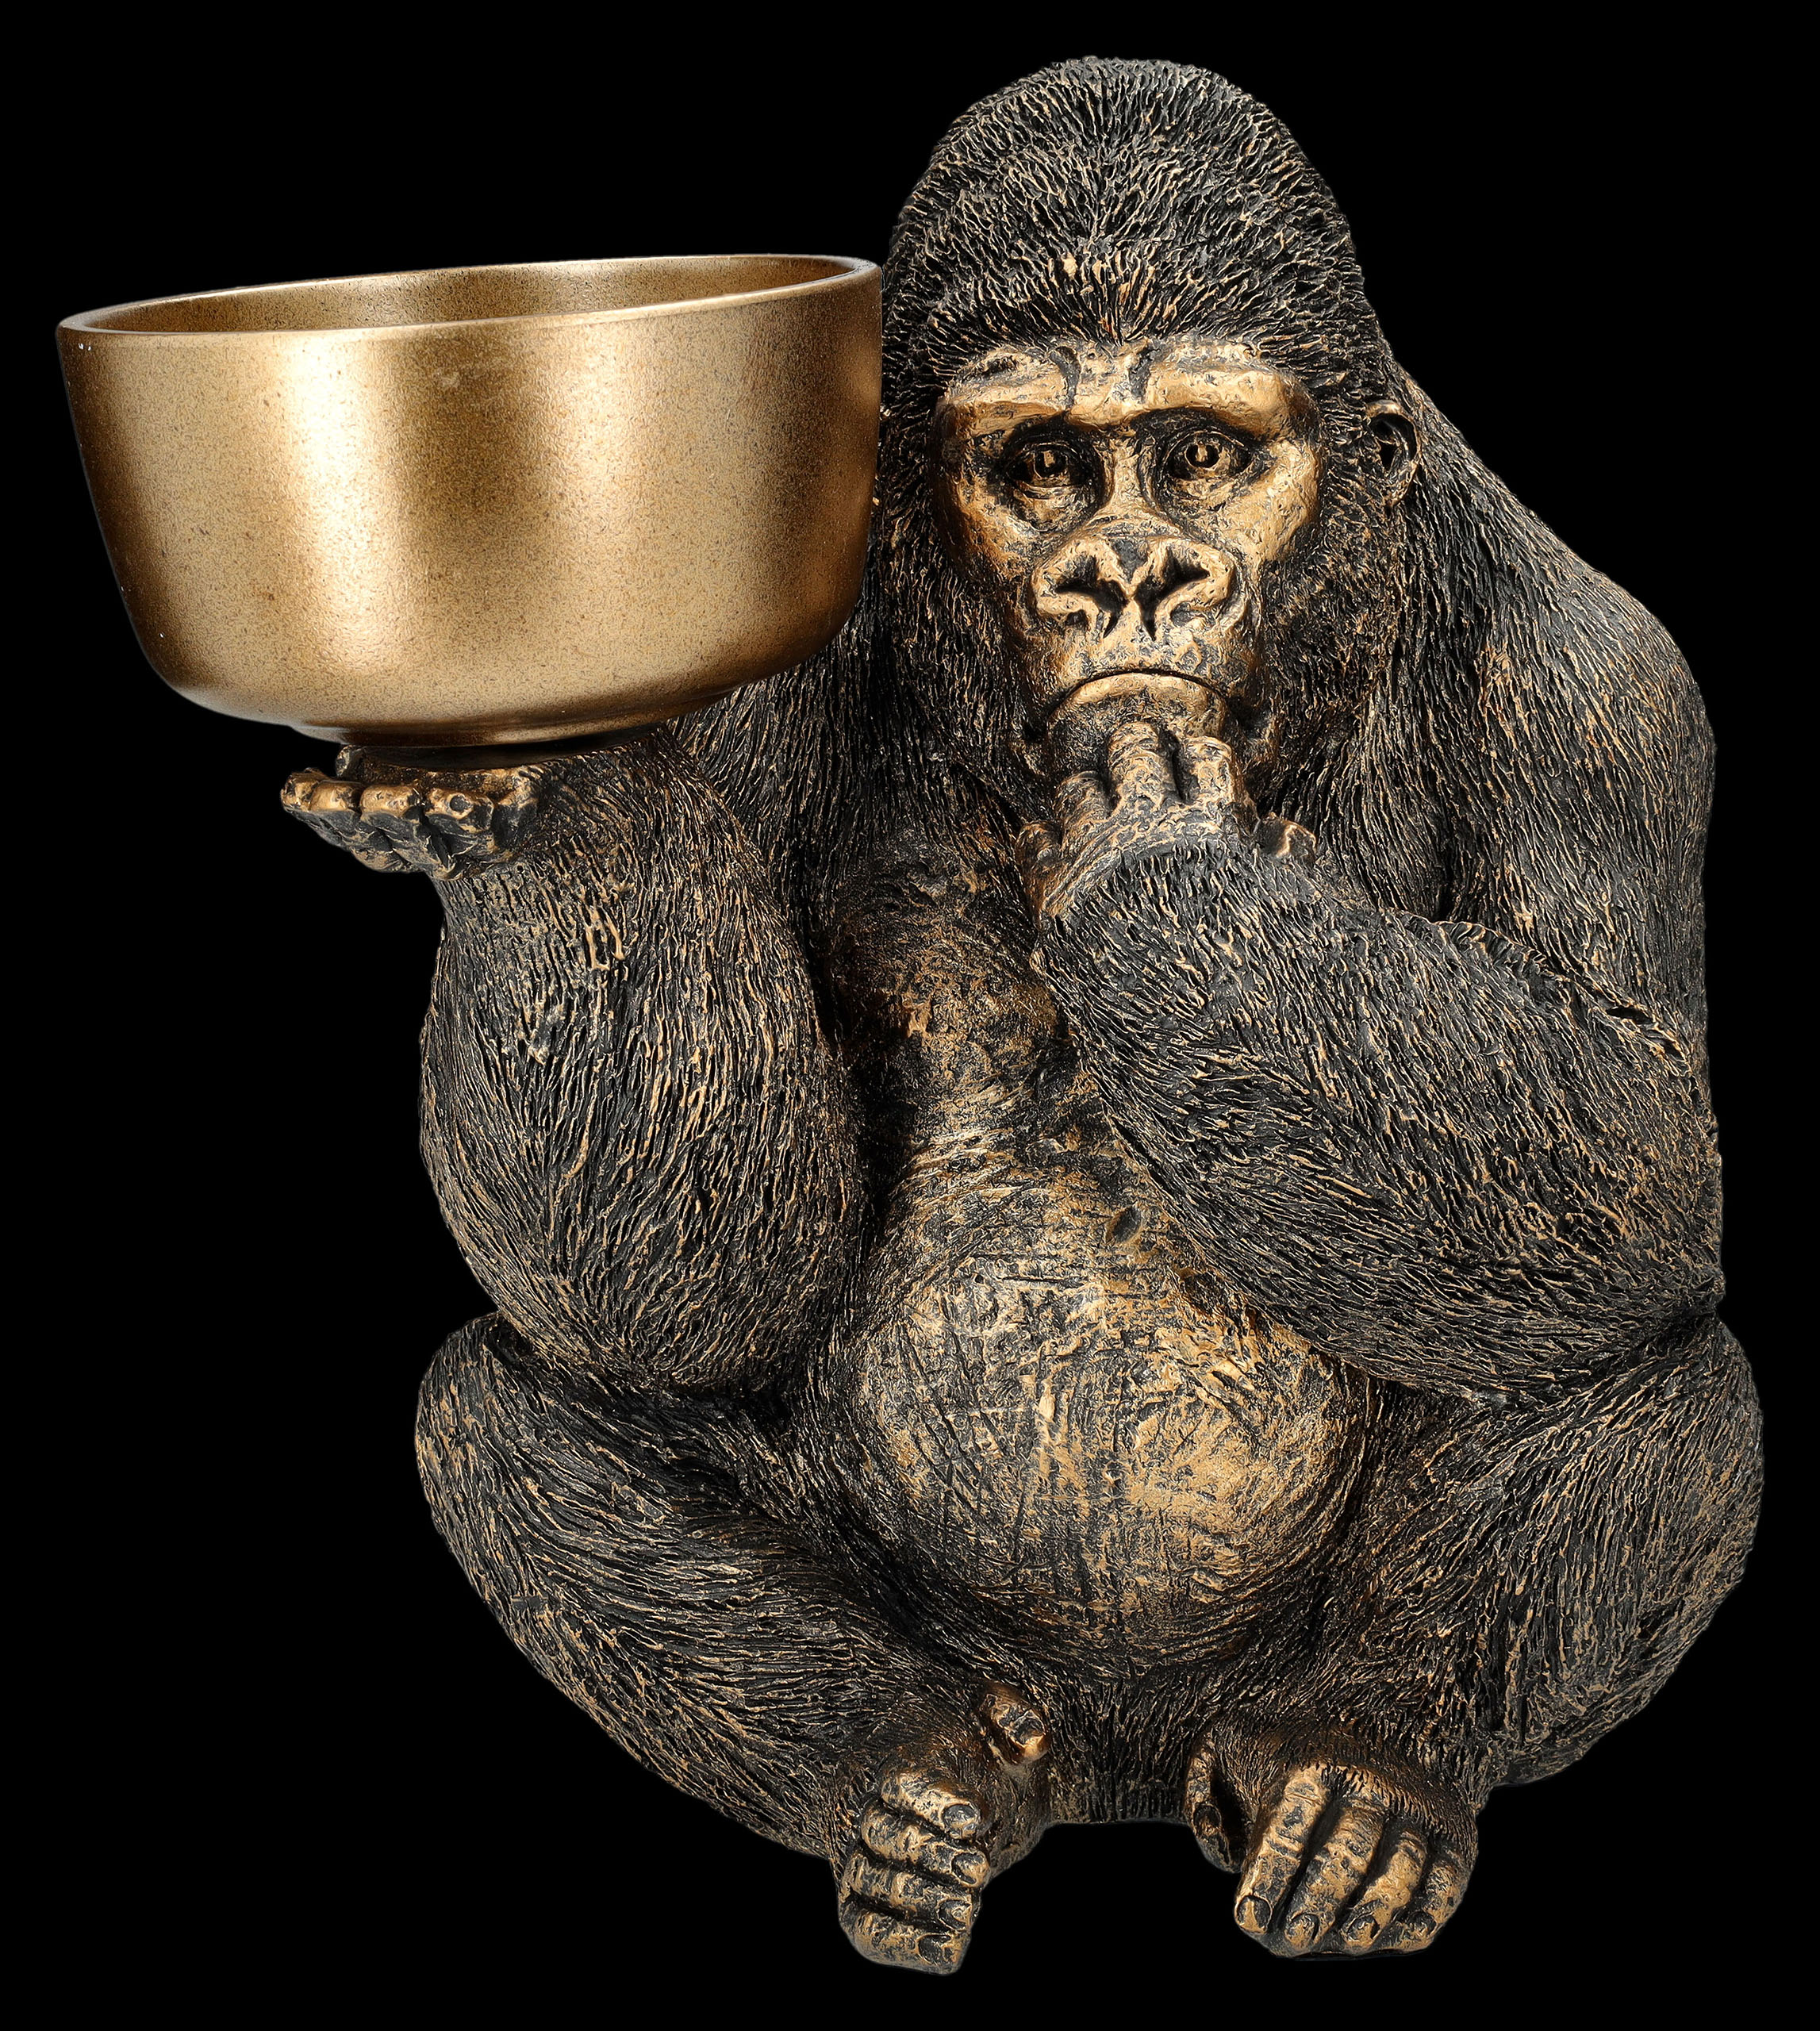 Holding Figurine Bowl Gorilla